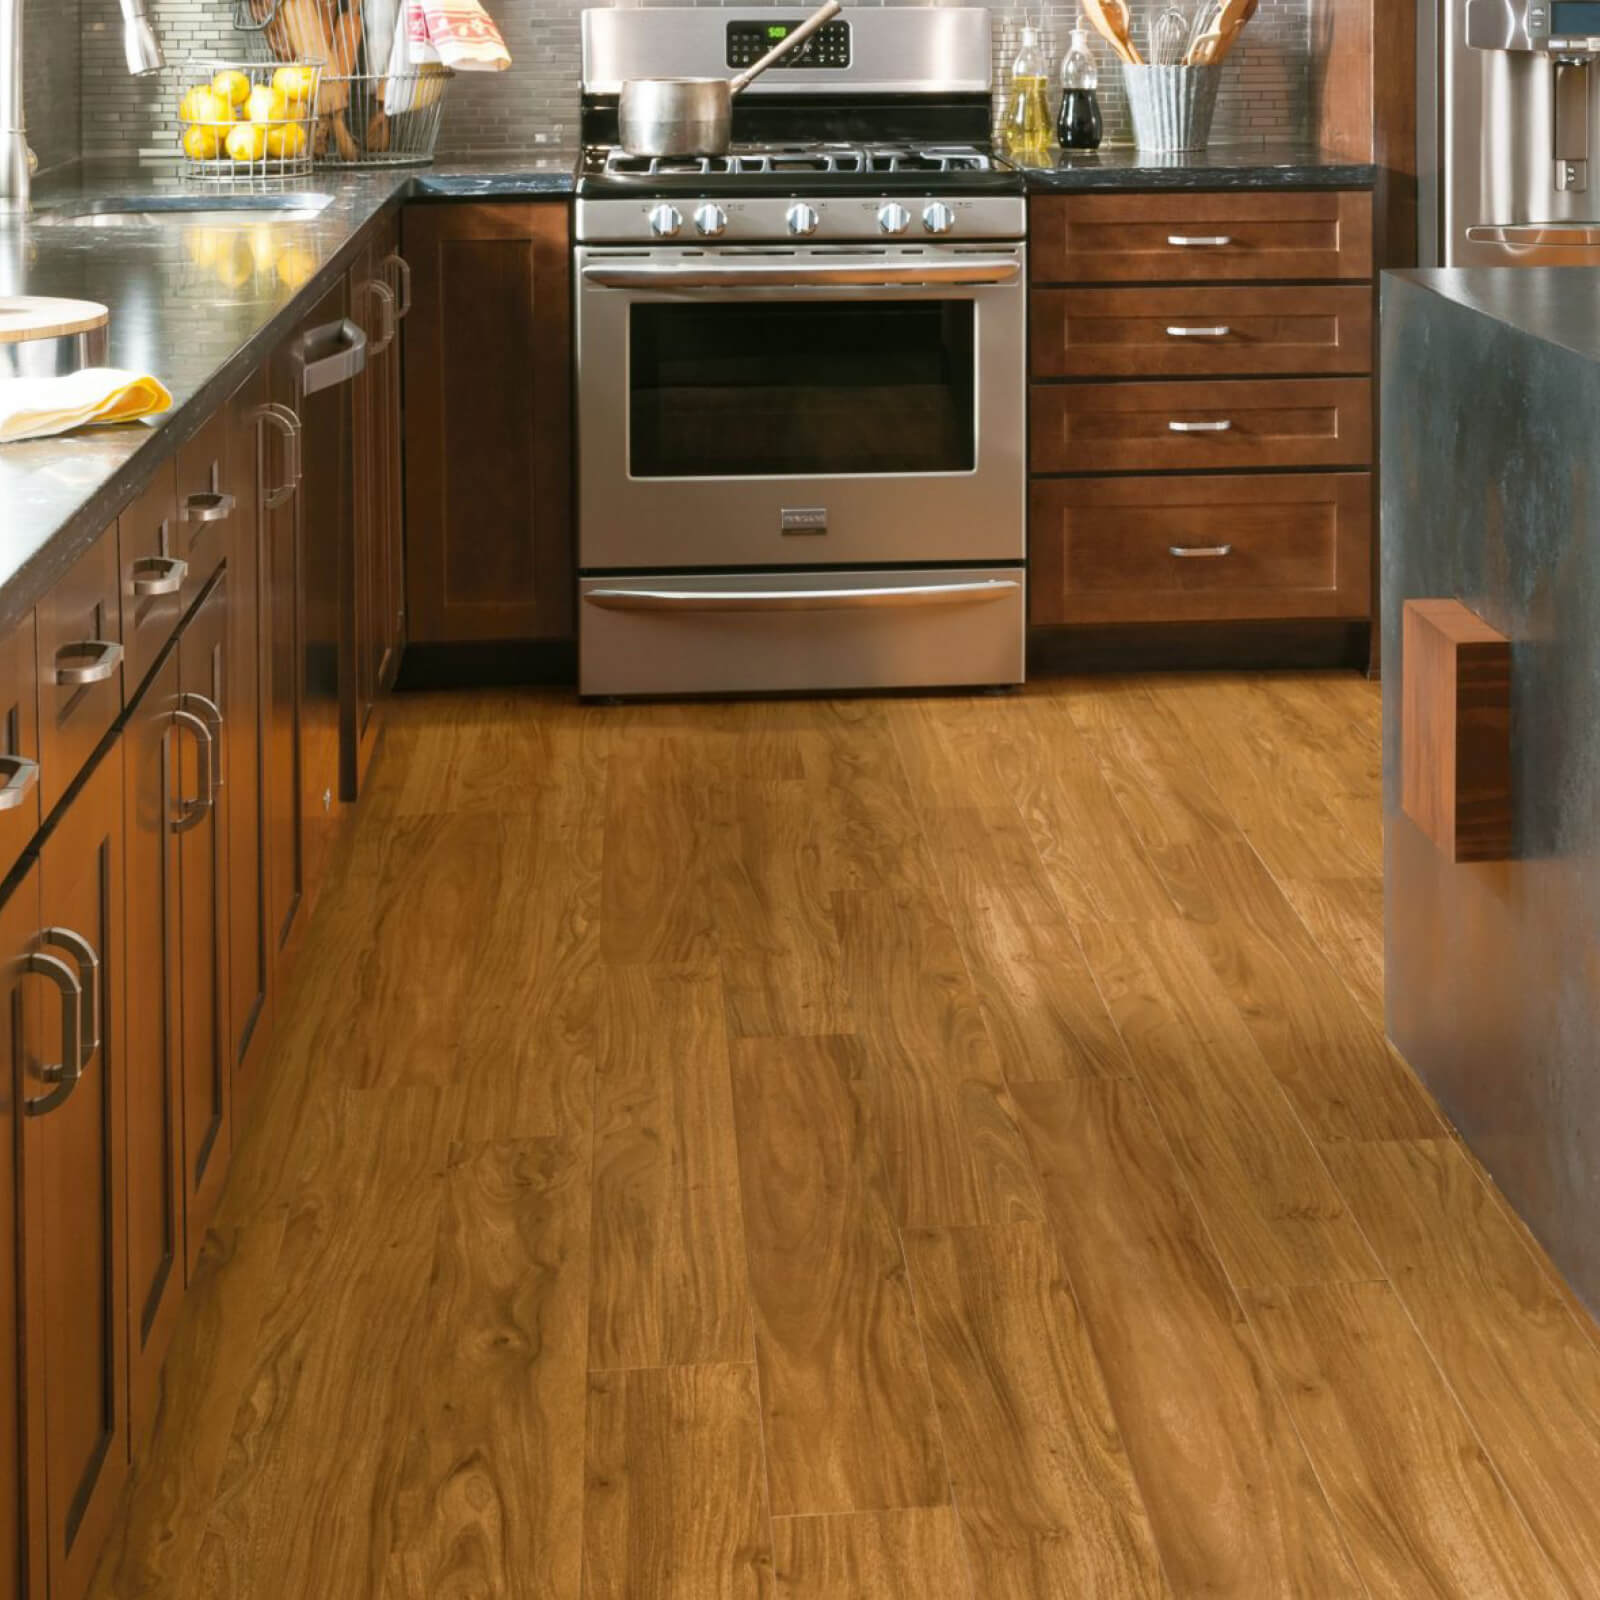 Vinyl flooring in kitchen | Allied Flooring & Paint